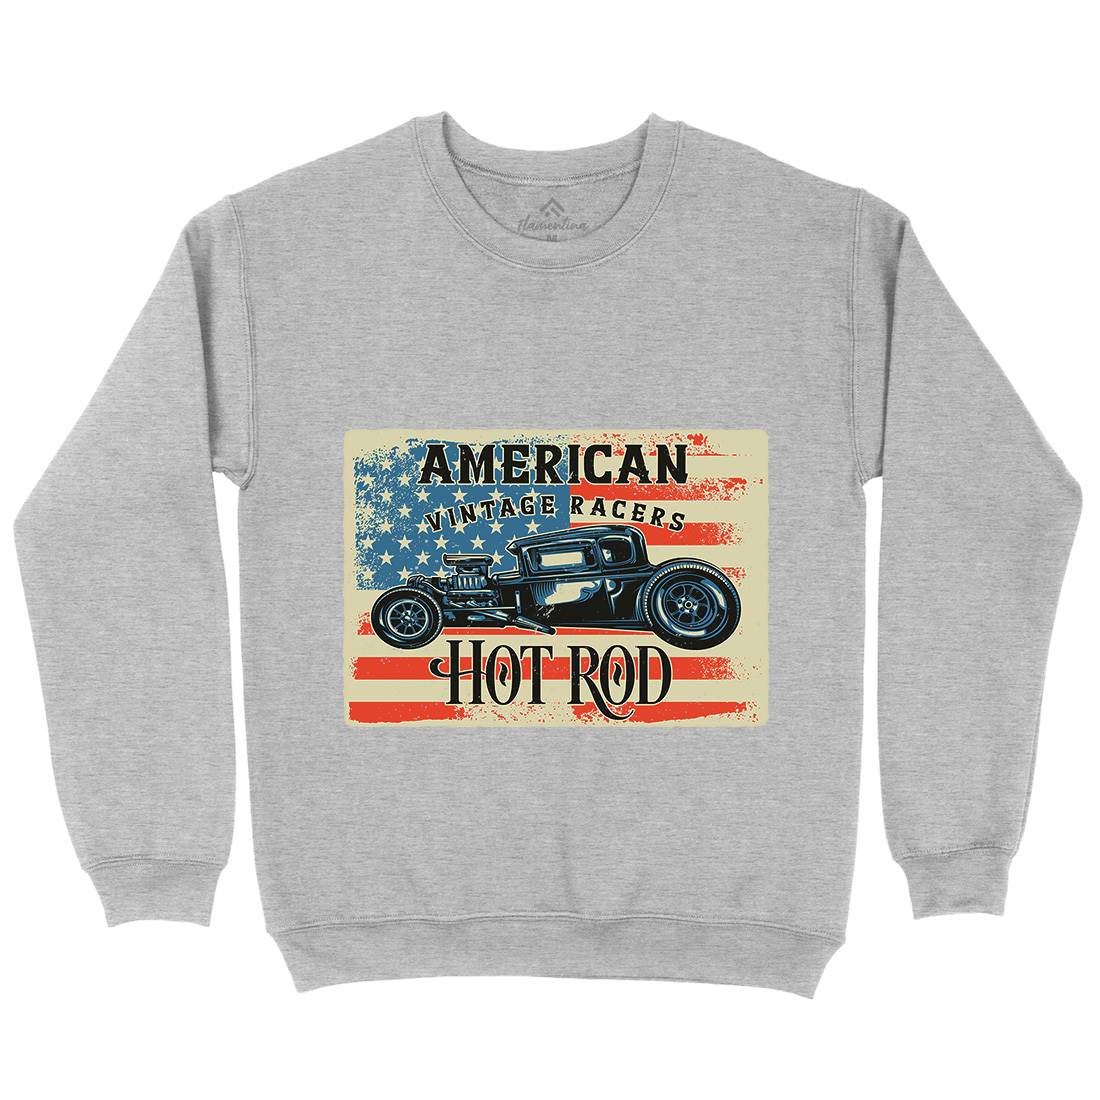 Hotrod Kids Crew Neck Sweatshirt Cars B136